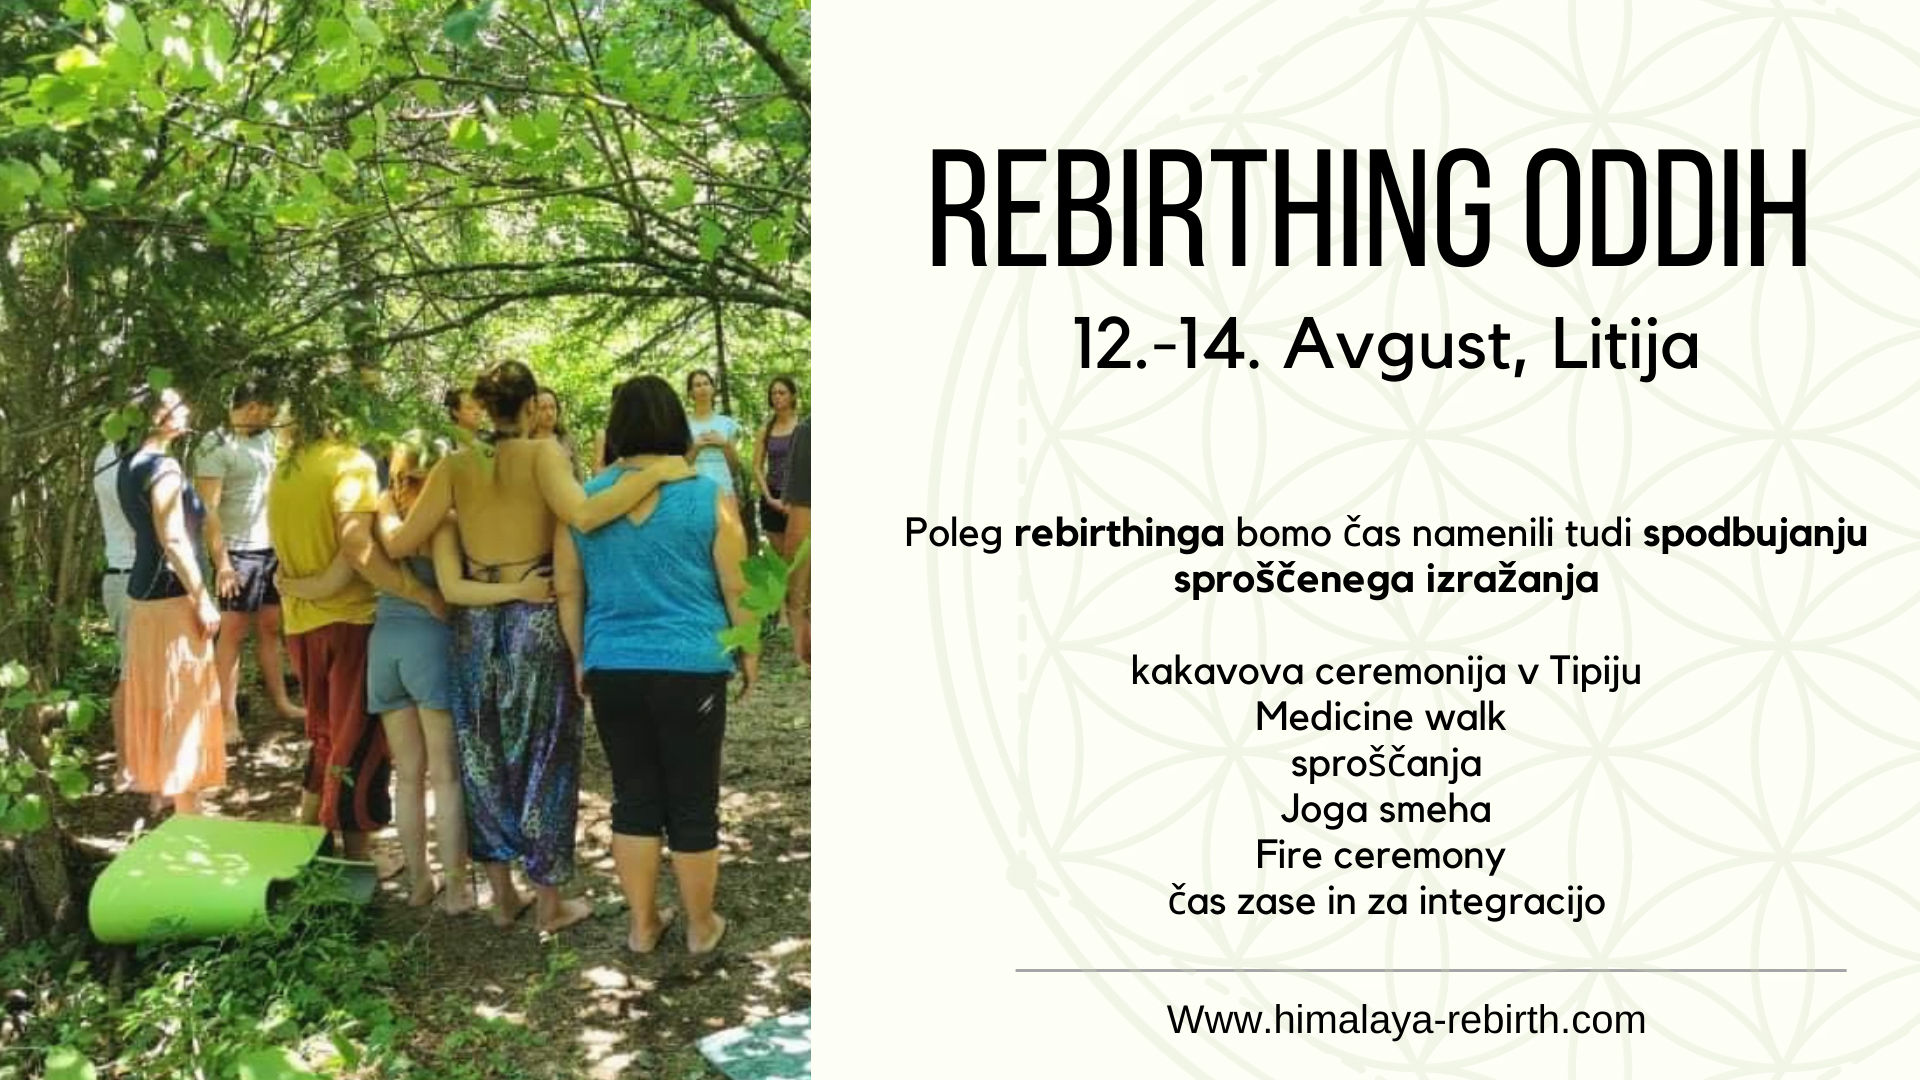 Rebirthing oddih v Litiji 12.-14.8 7